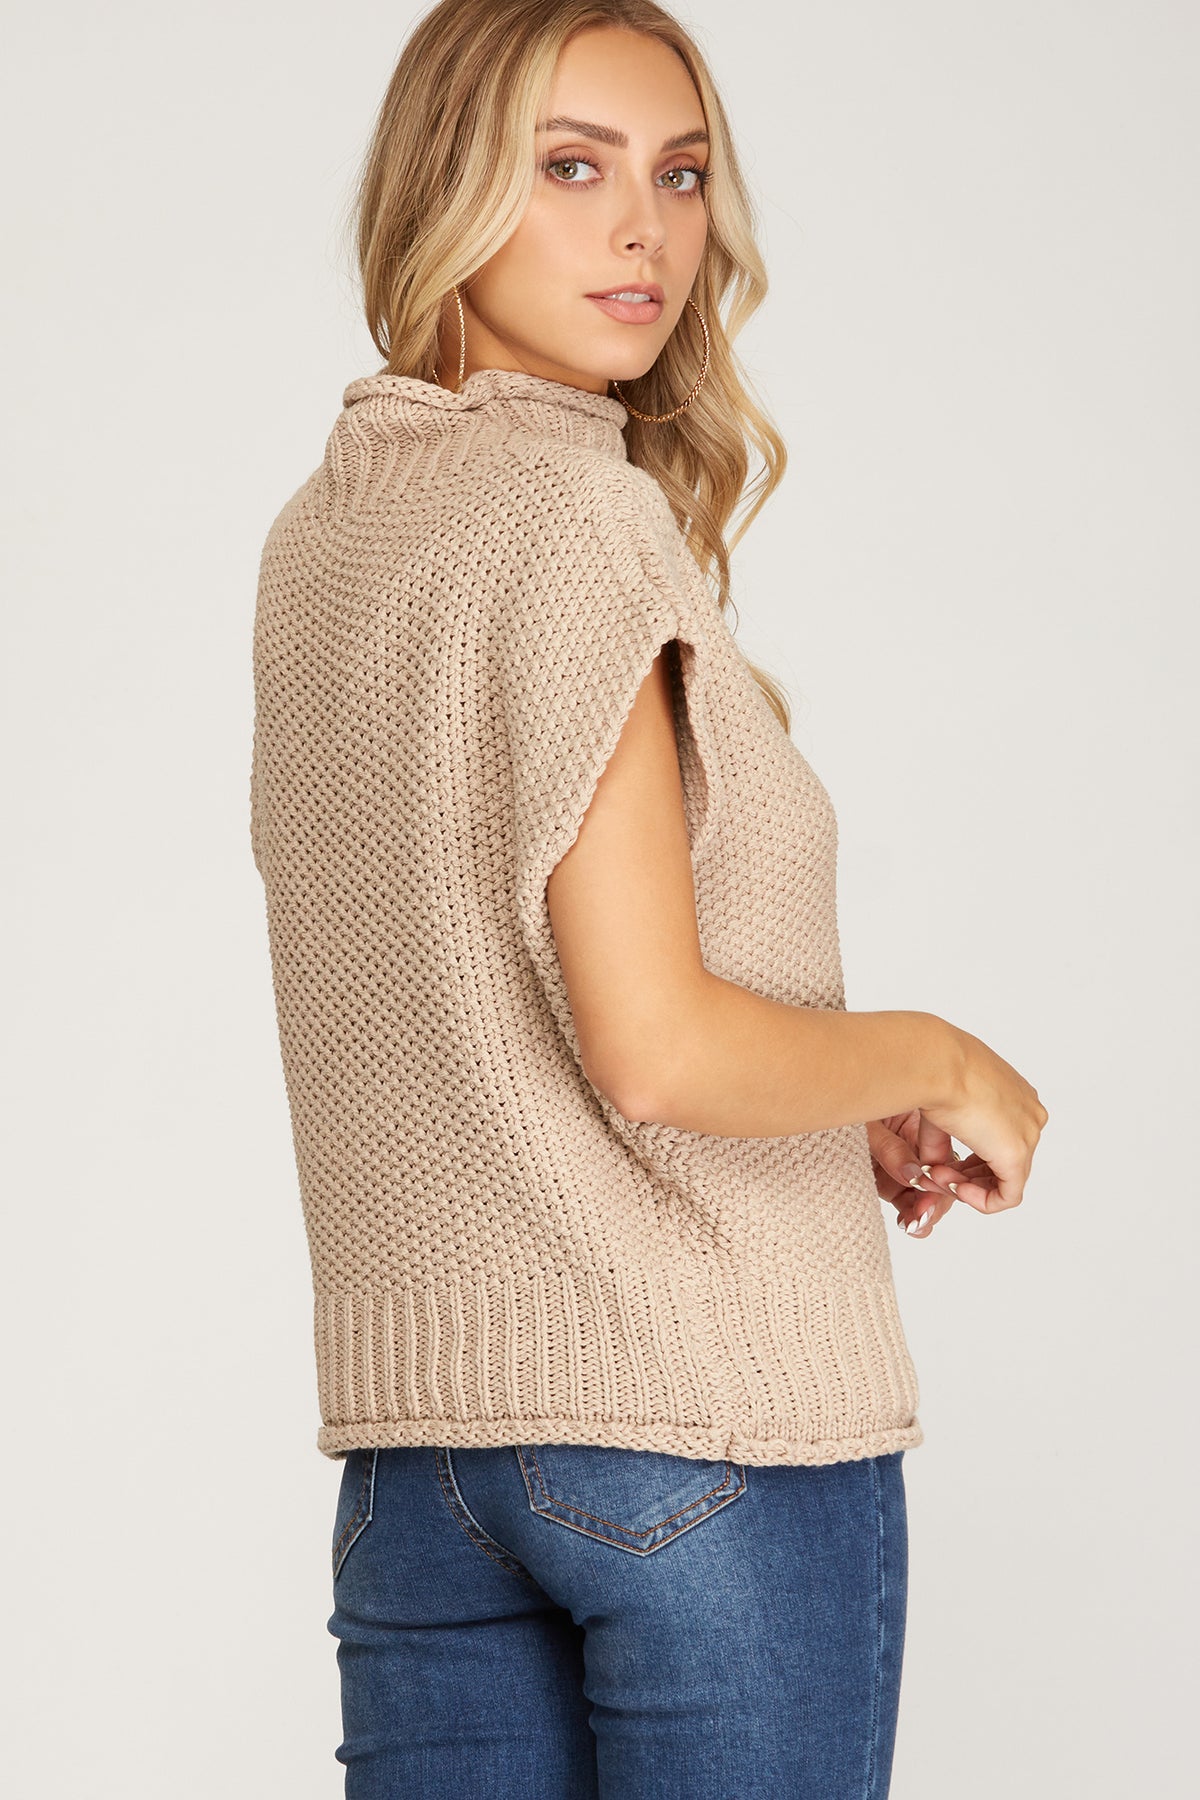 The KarLee Sweater Top